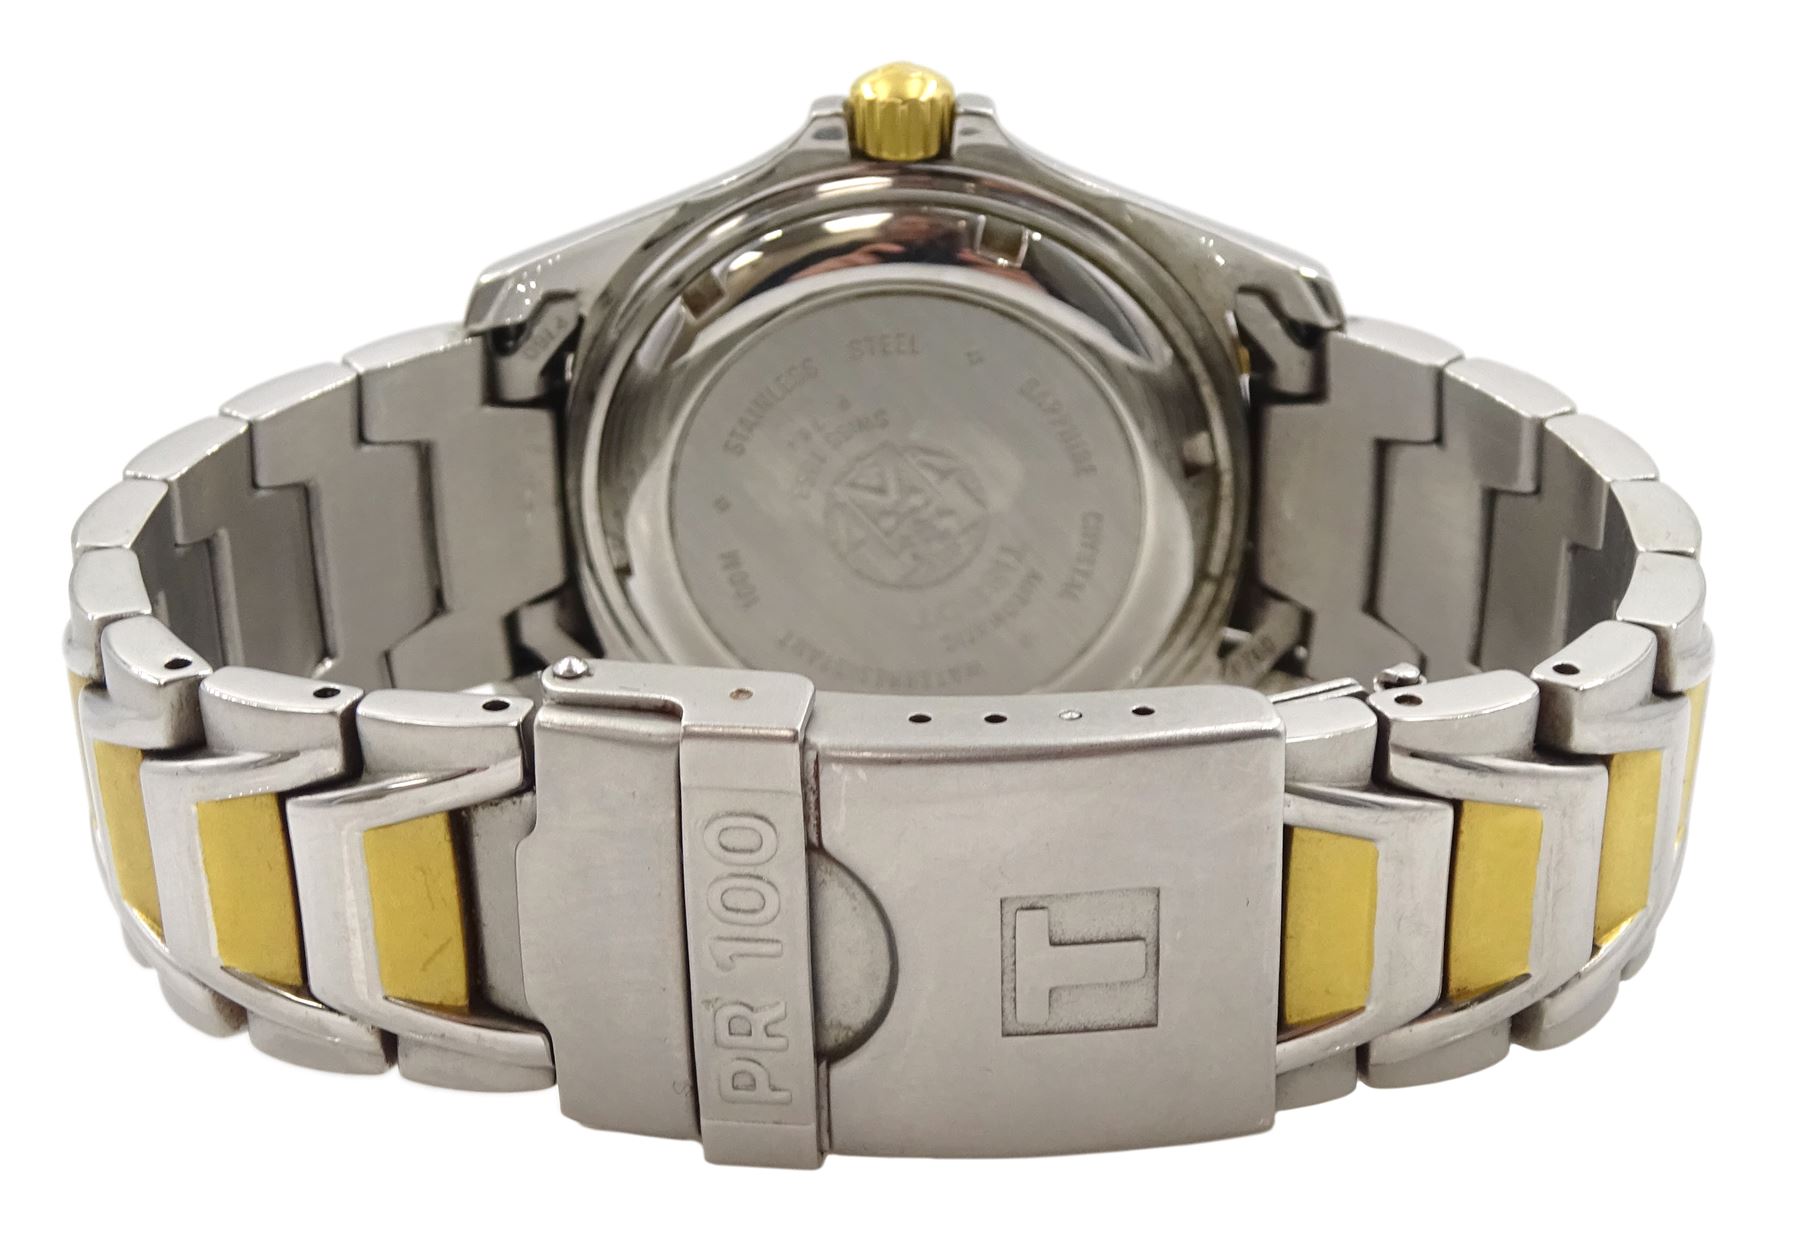 Tissot PR 100 gentleman's stainless steel automatic wristwatch - Image 2 of 3